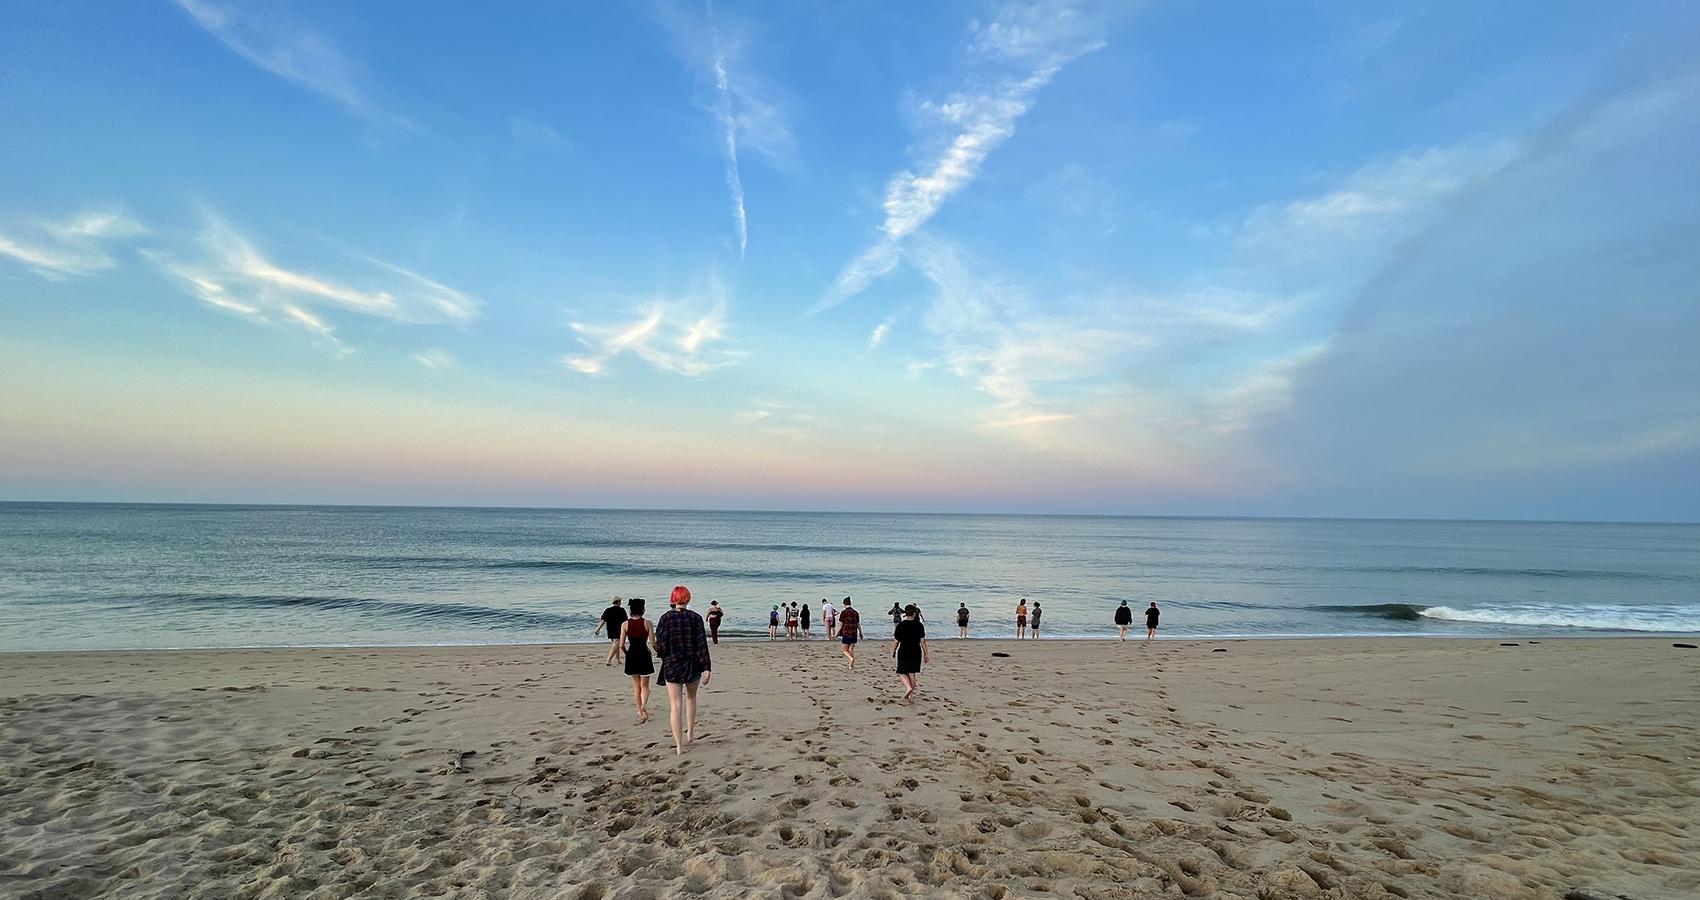 people on sandy beach with blue and orange skyline on the horizon